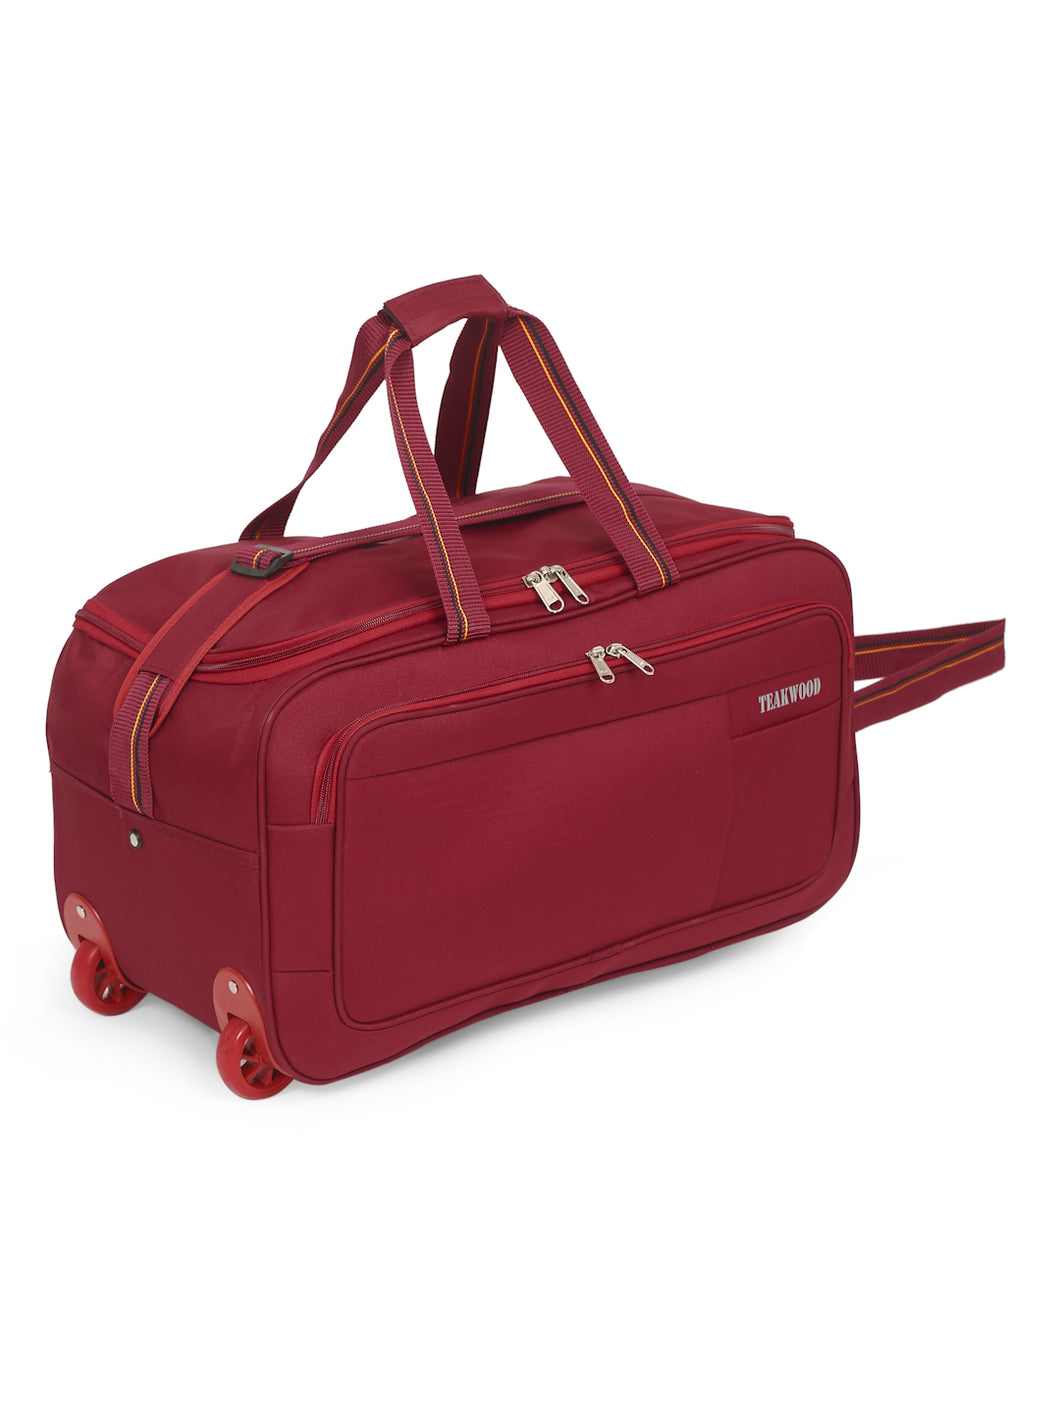 Teakwood Rolling Small Duffel Bag (Red)